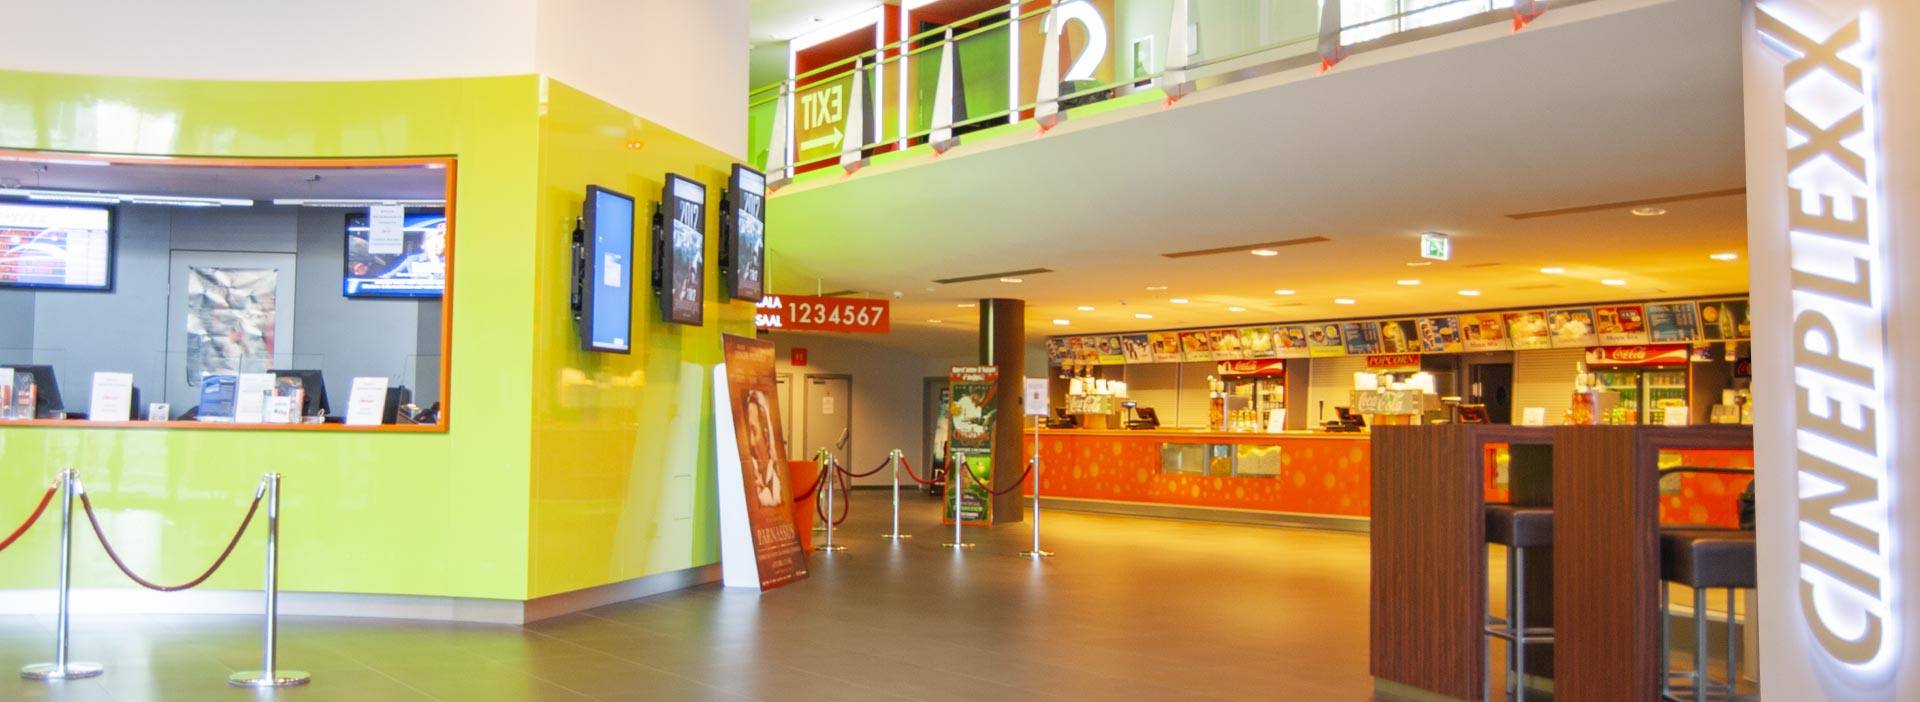 Cineplexx Bolzano - Cinema multisala